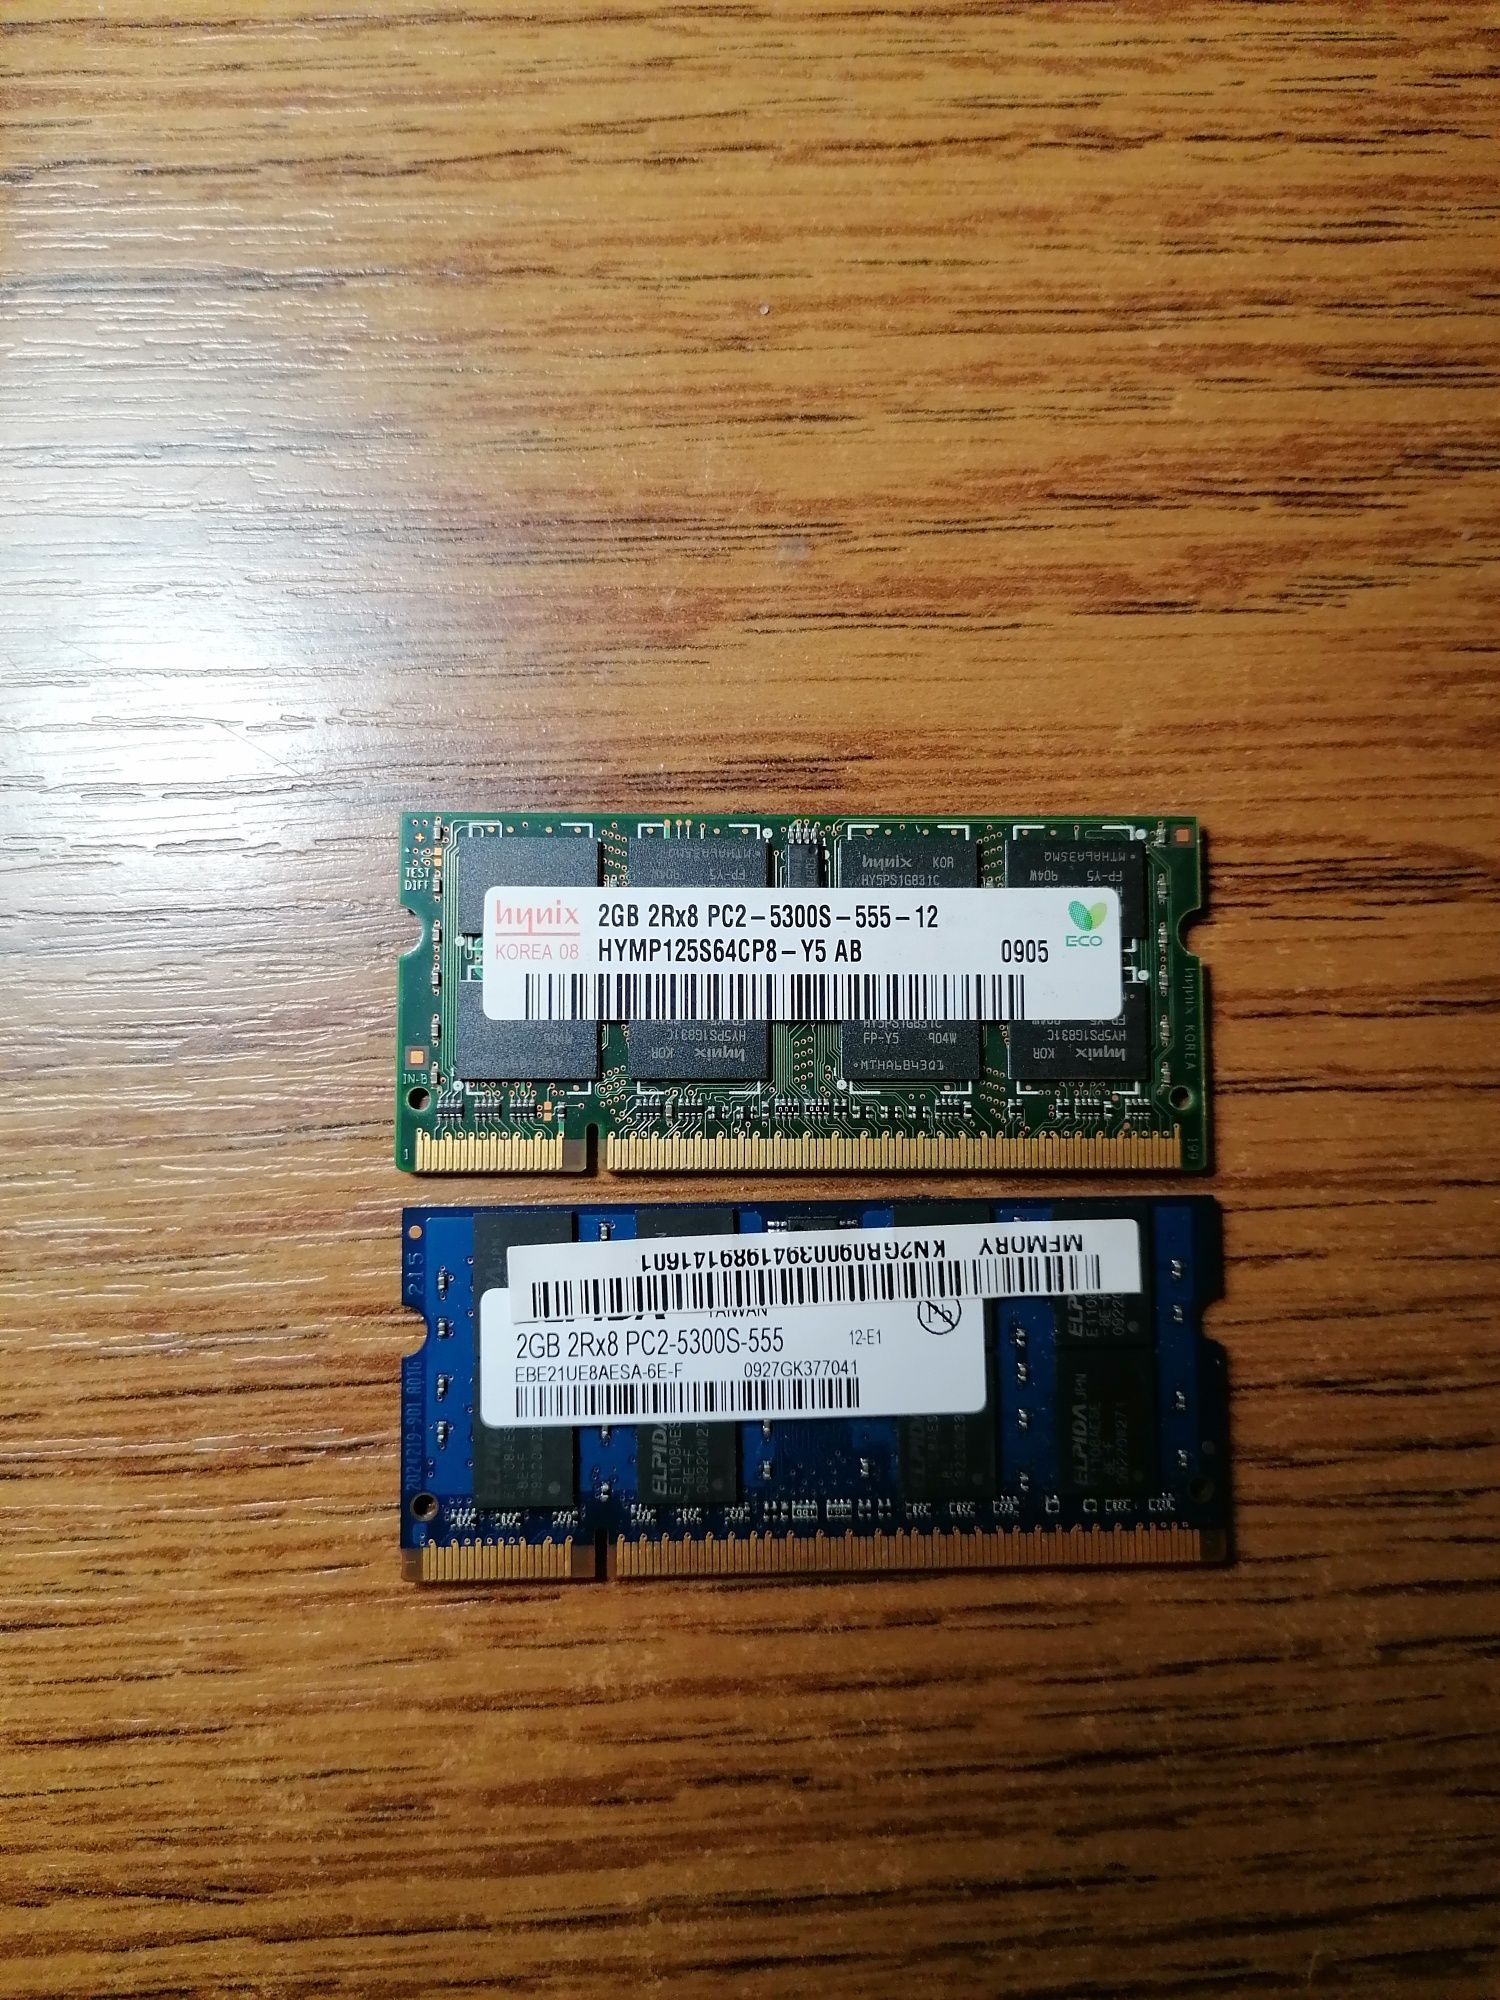 RAM DDR / DDR2 Laptop / PC 2Gb/1Gb/512Mb